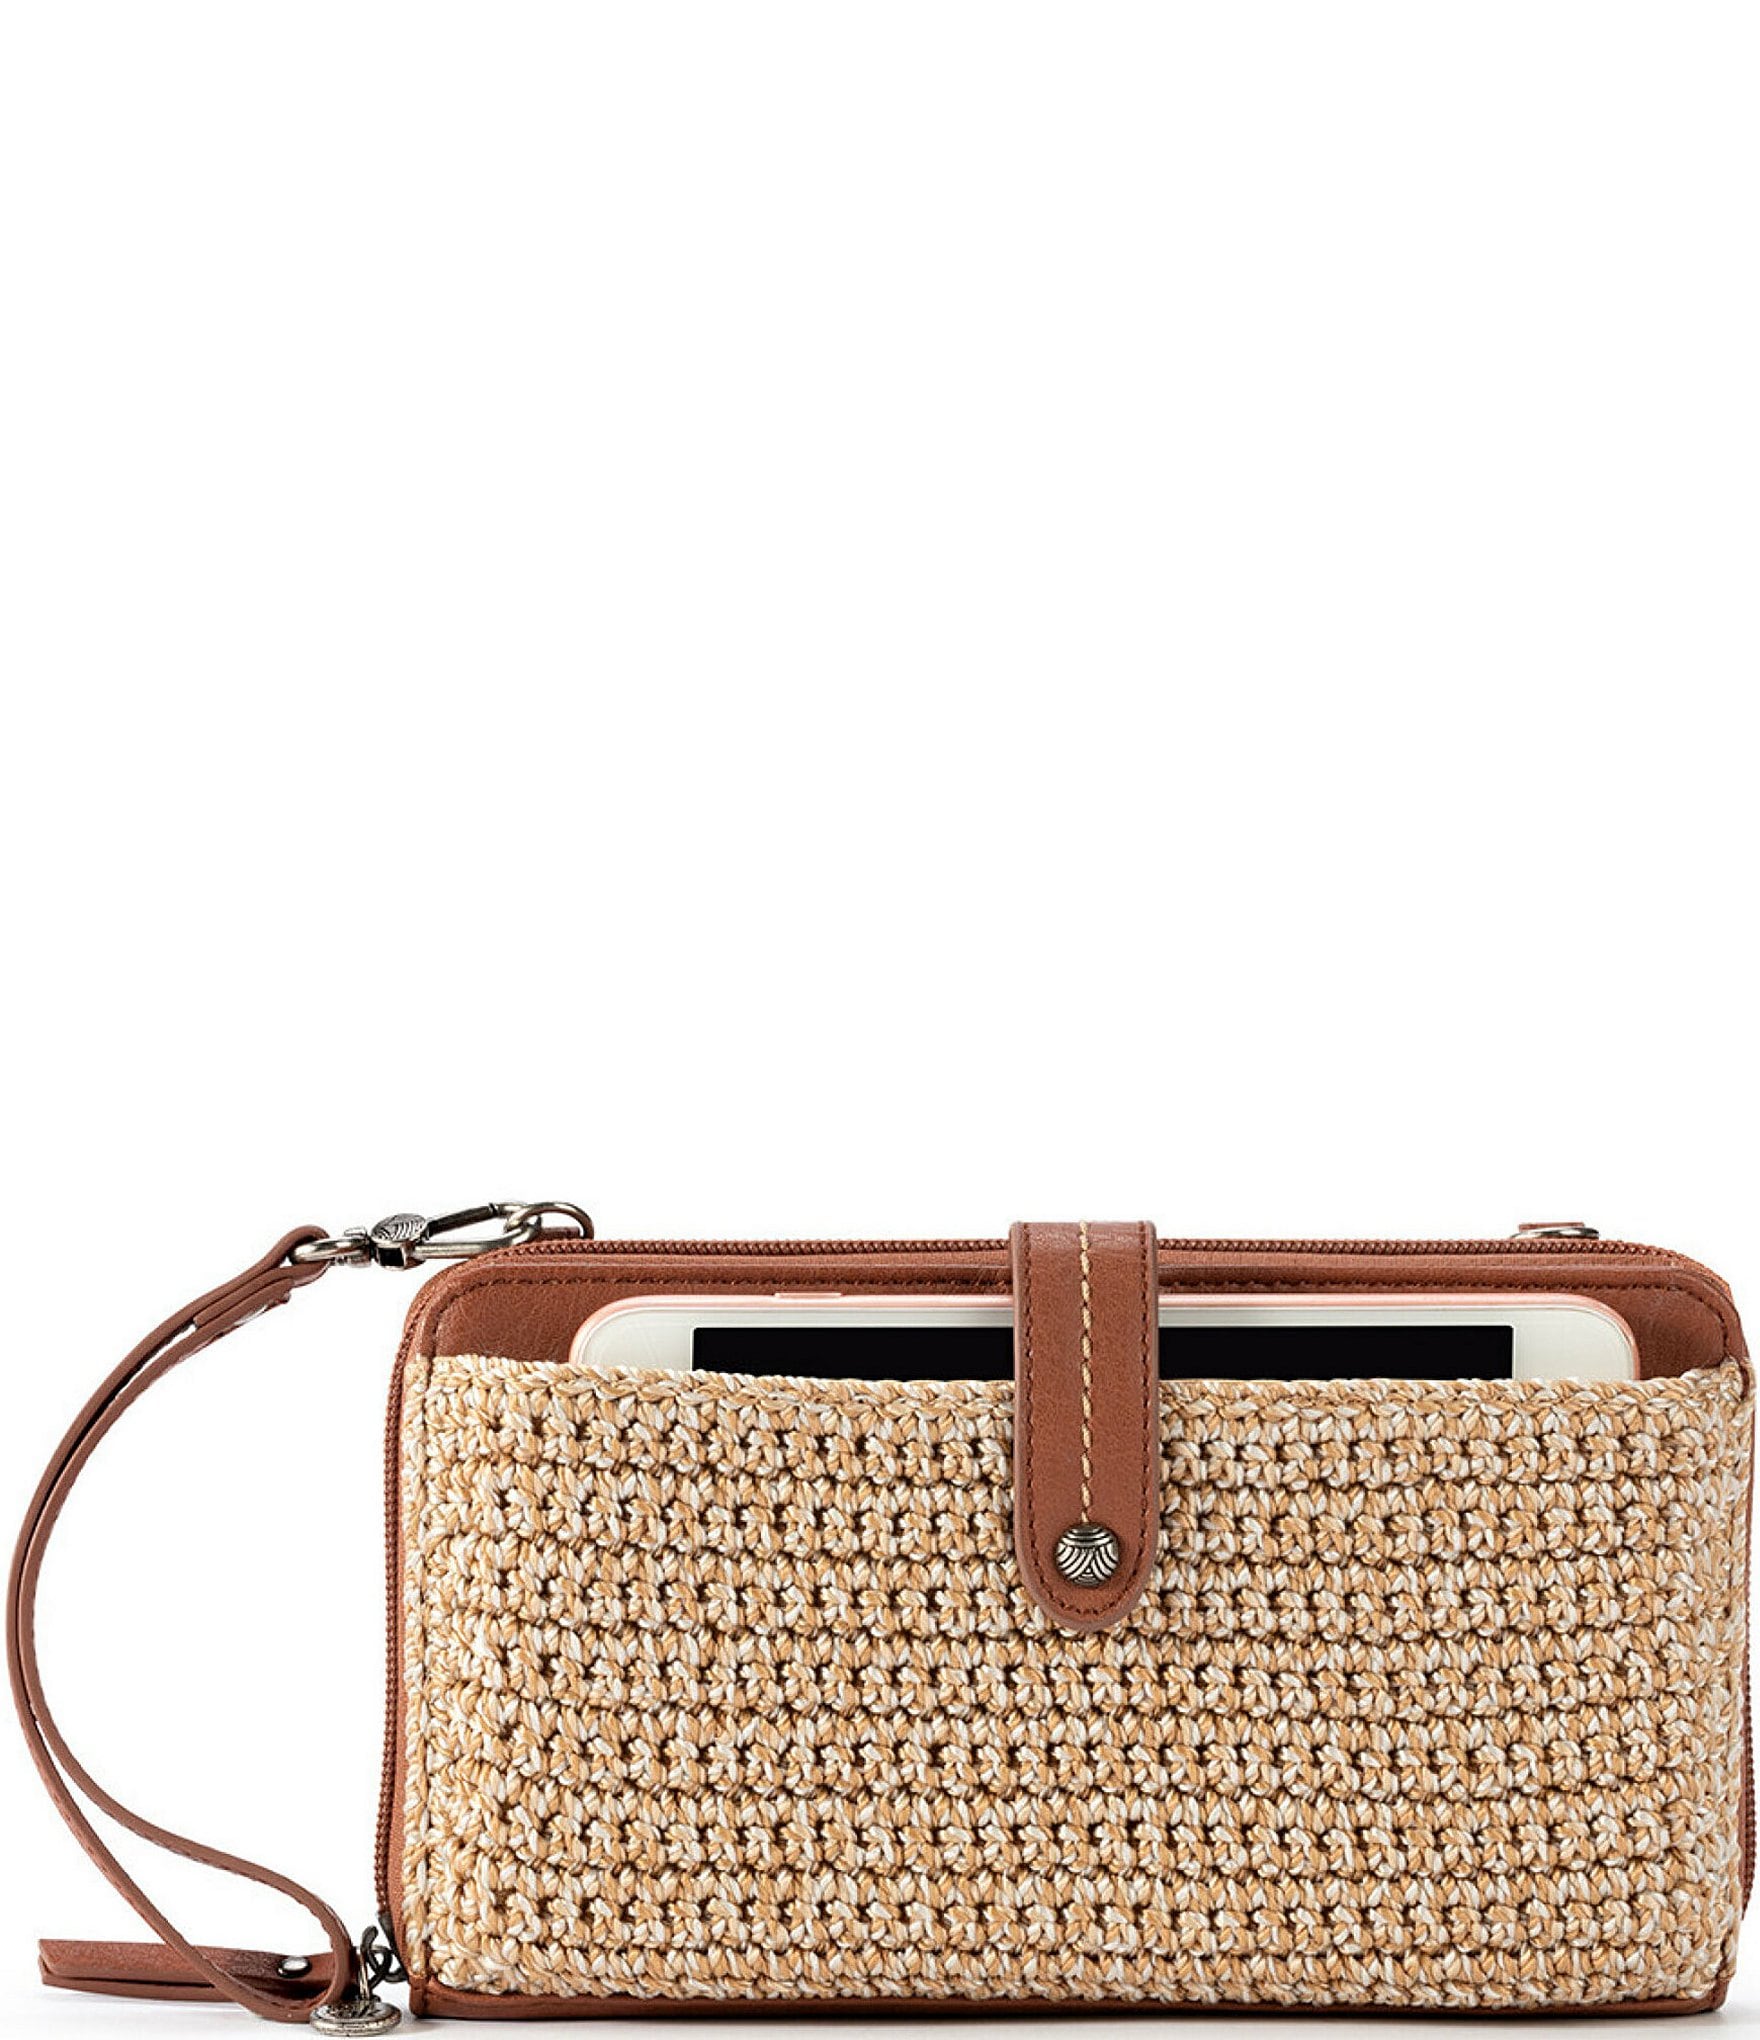 The Sak Ashland Crossbody Bag in Leather, Buttercup II: Handbags: Amazon.com